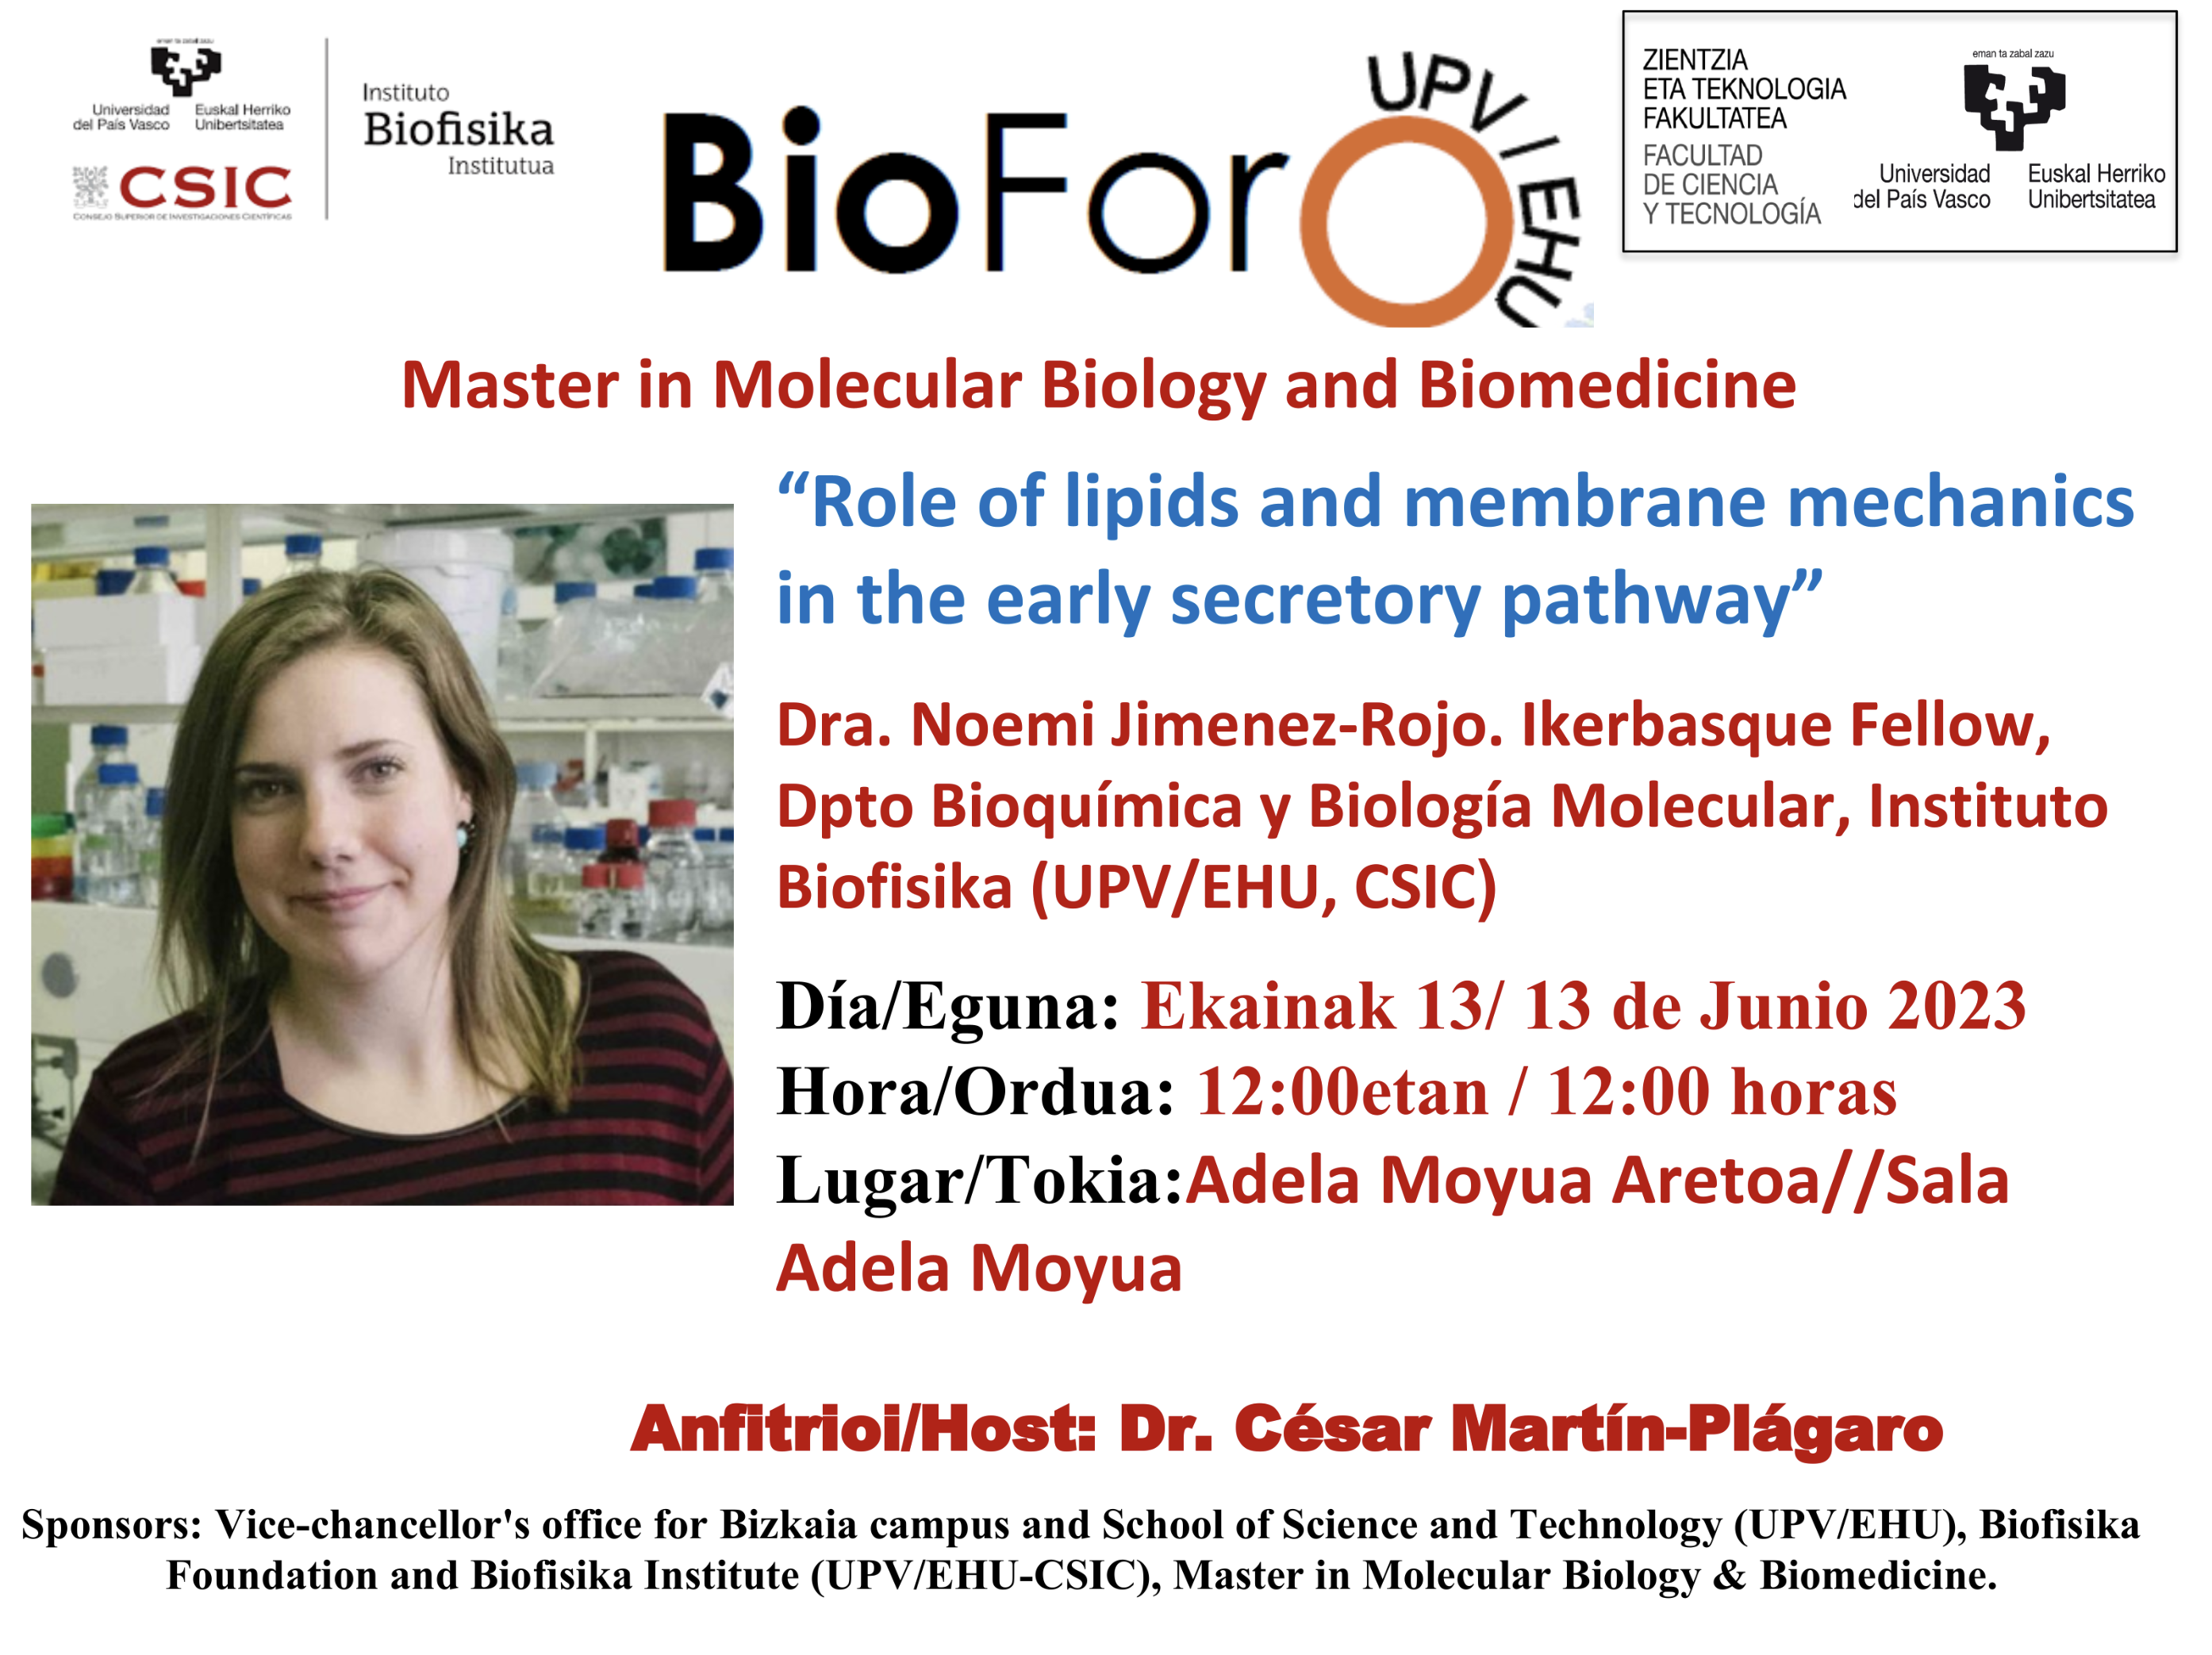 BioForo seminar: "Role of lipids and membrane mechanics in the early secretory pathway"